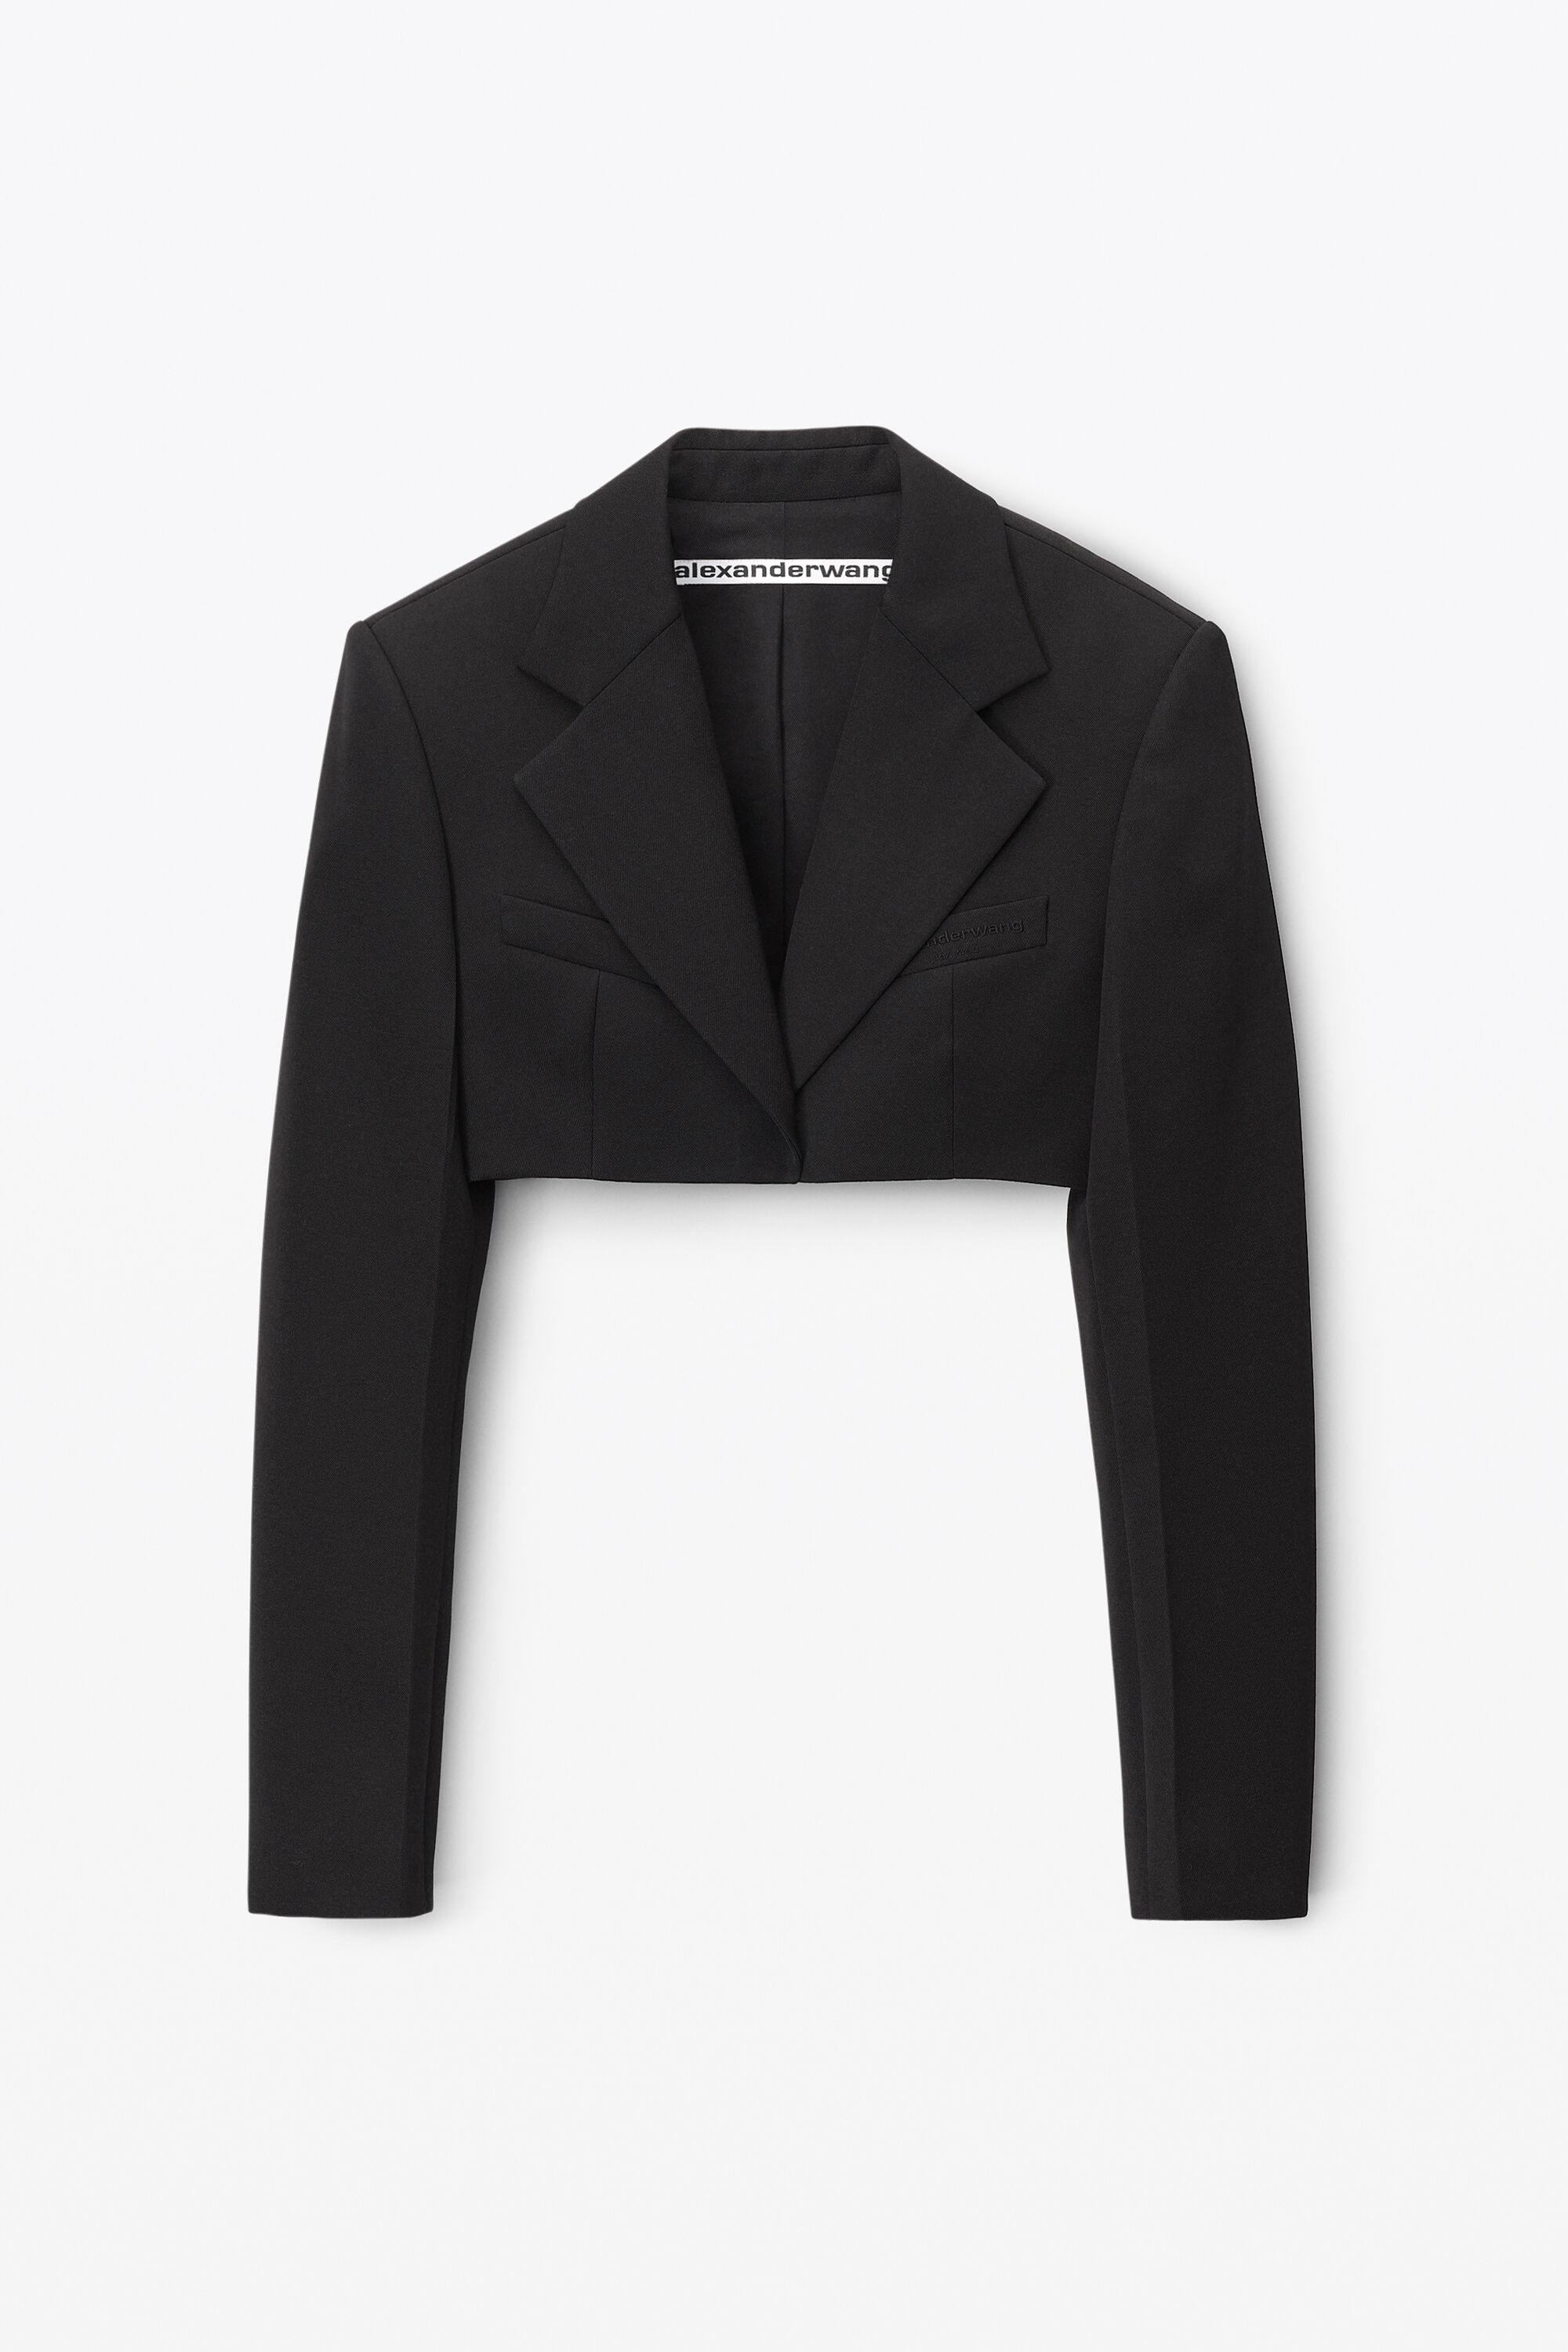 alexanderwang cropped tuxedo blazer in wool tailoring BLACK 